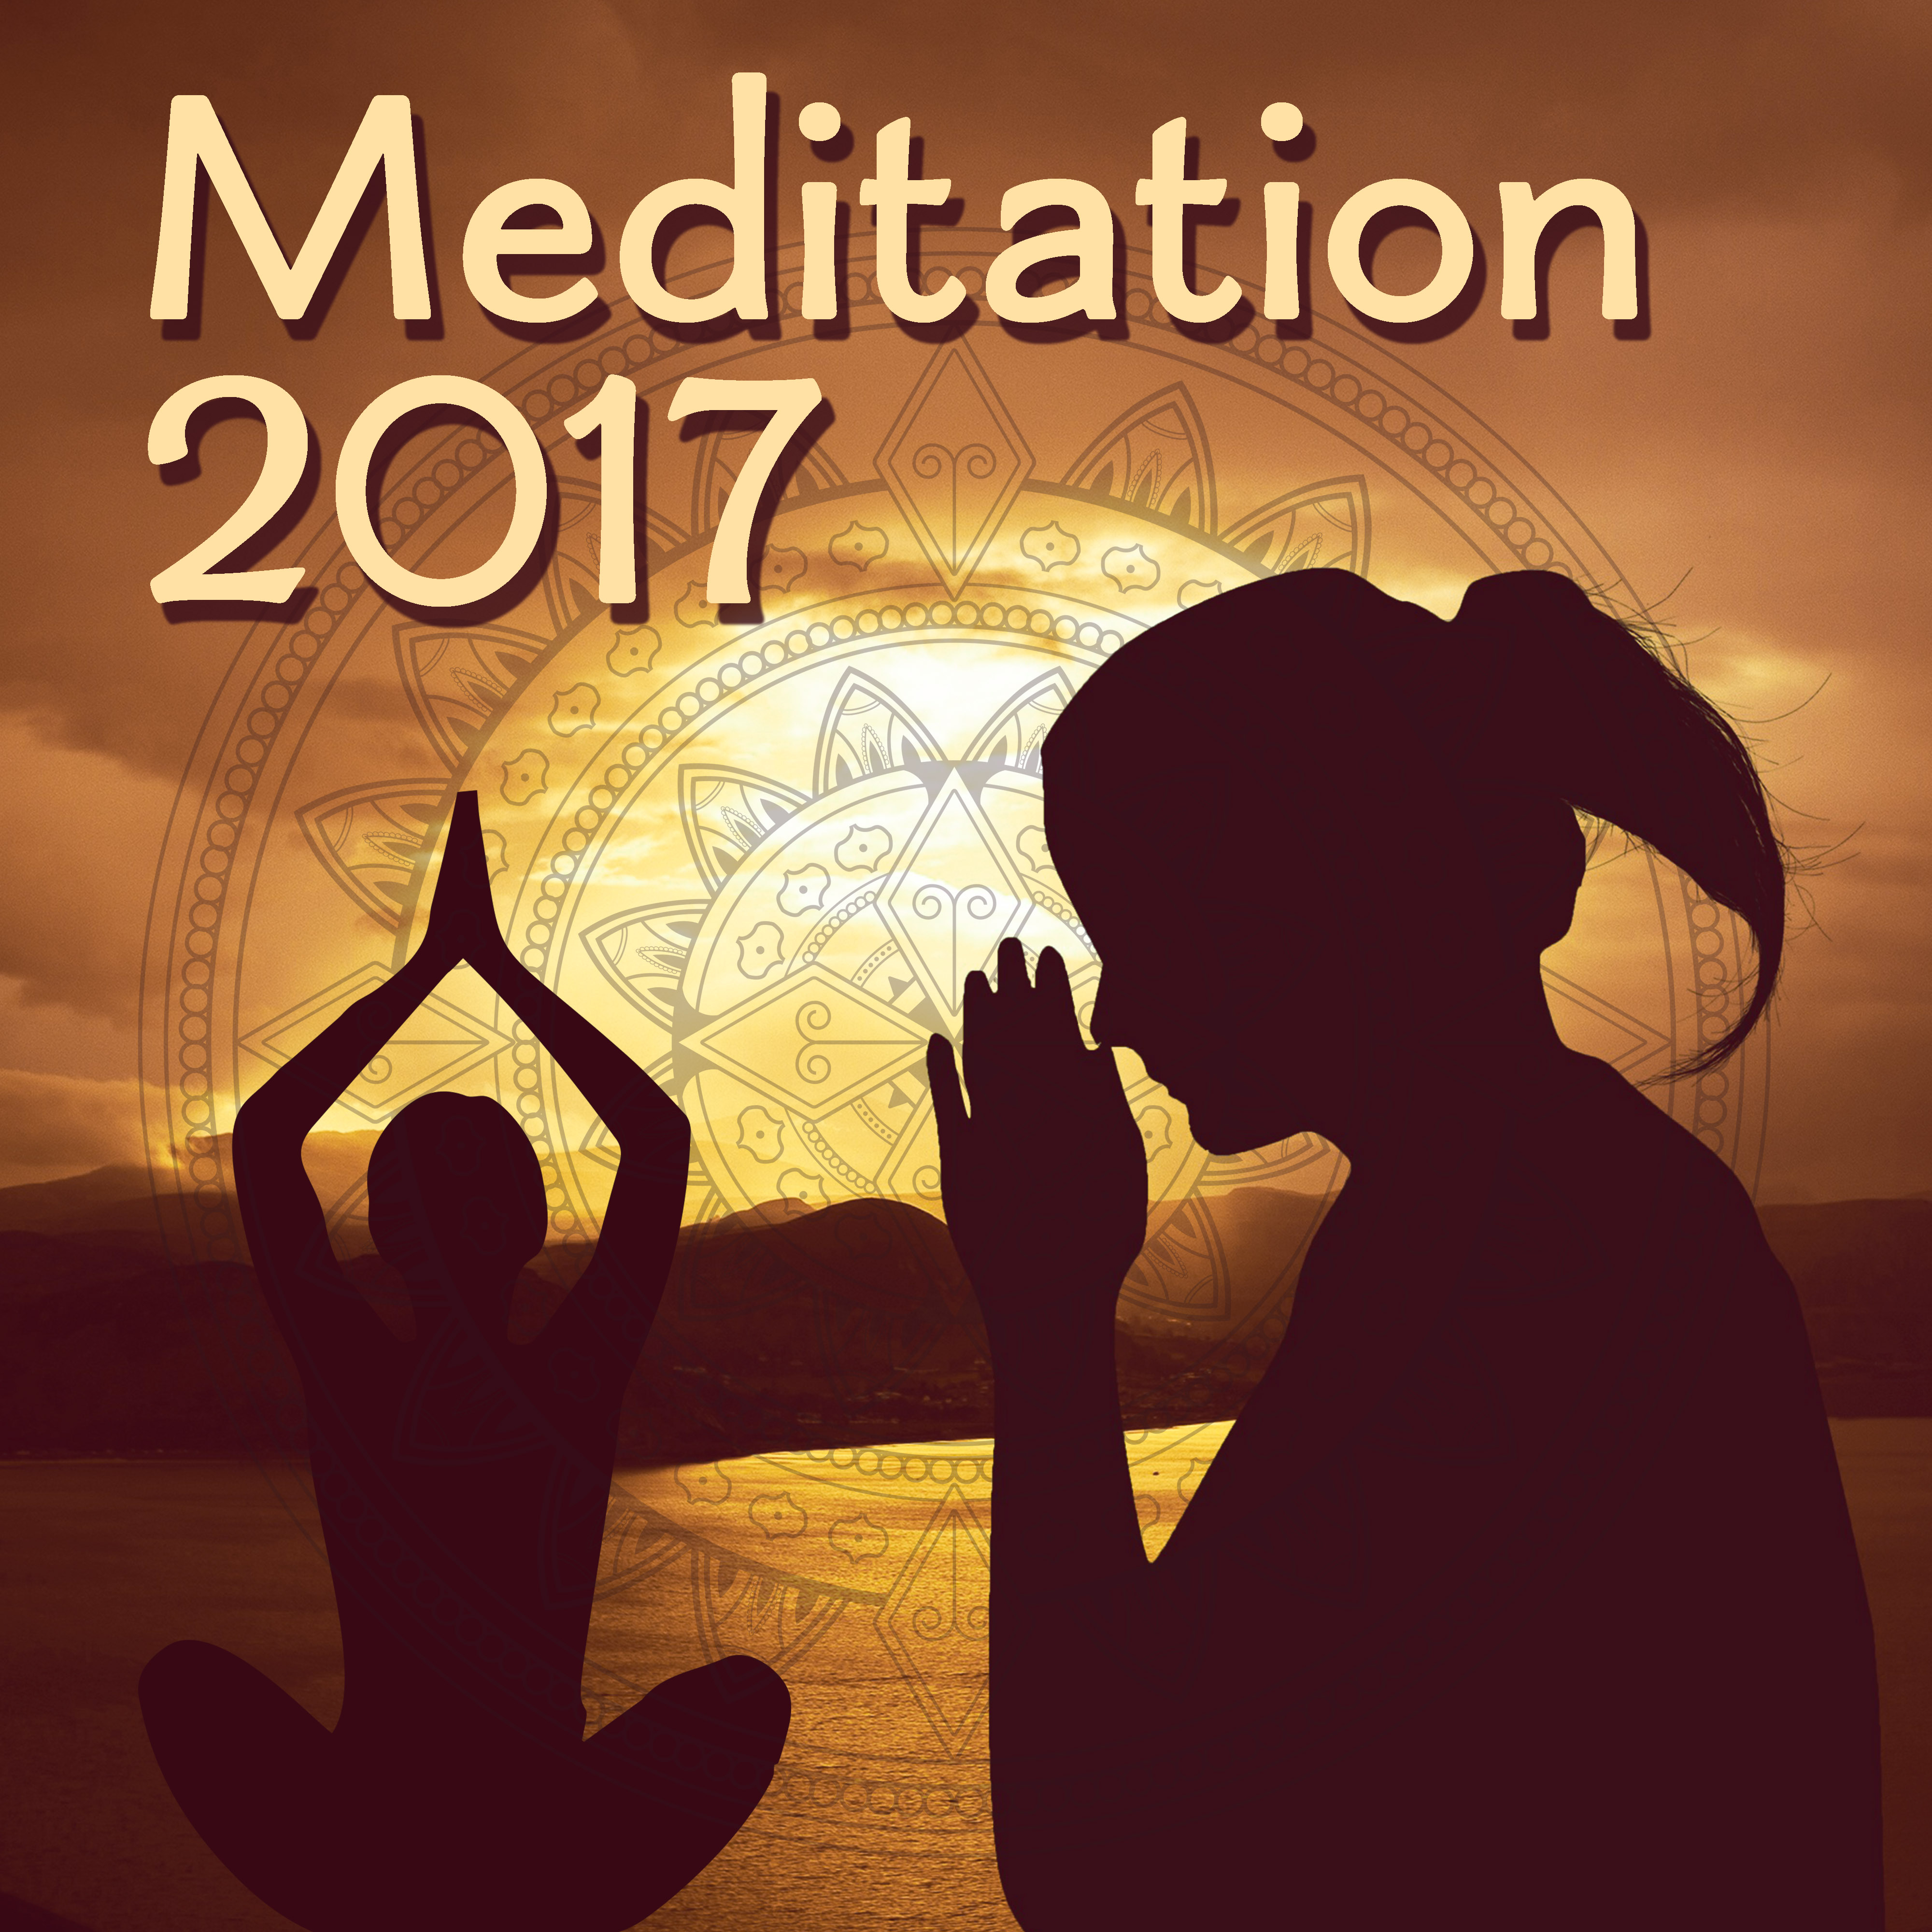 Meditation 2017 – Training Yoga, Chakra Balancing, Nature Sounds for Healing, Relaxation, Yoga Meditation, Inner Tranquility